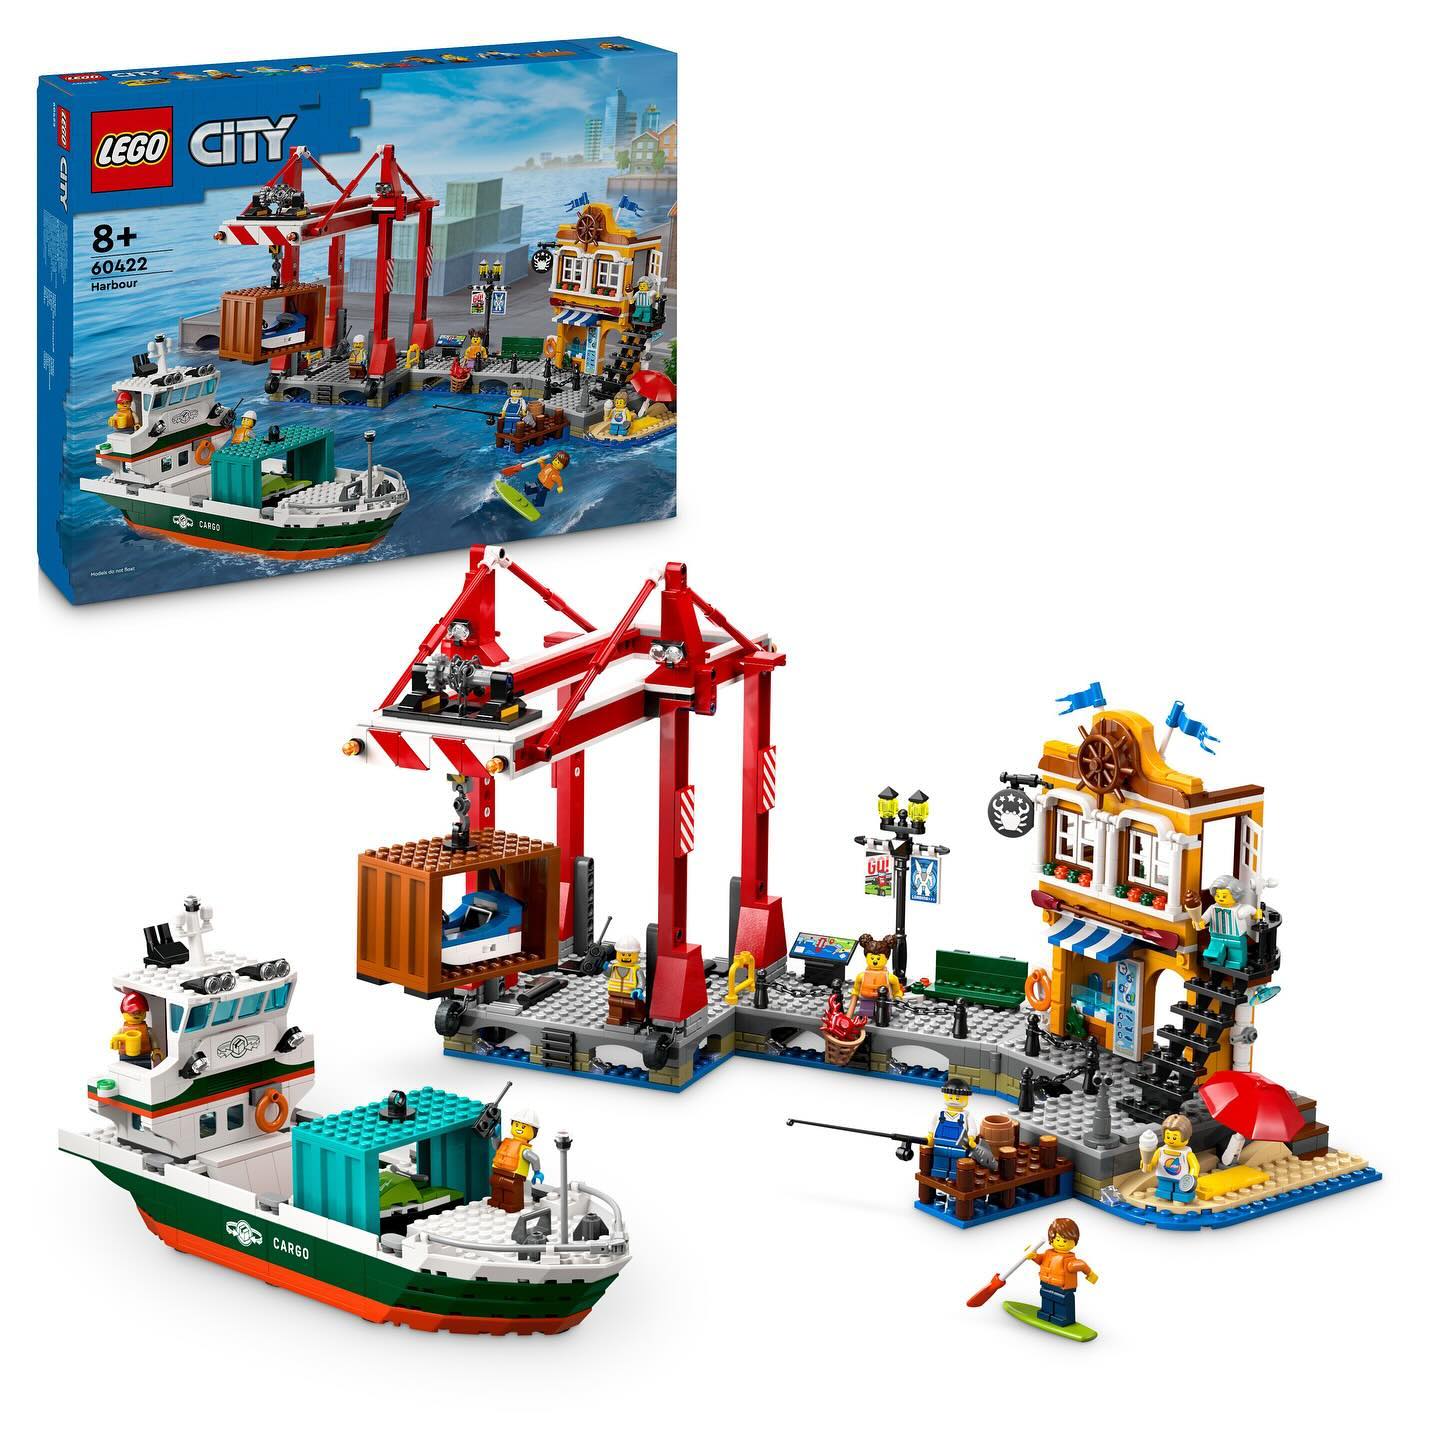 LEGO-City-Harbour-60422.jpg